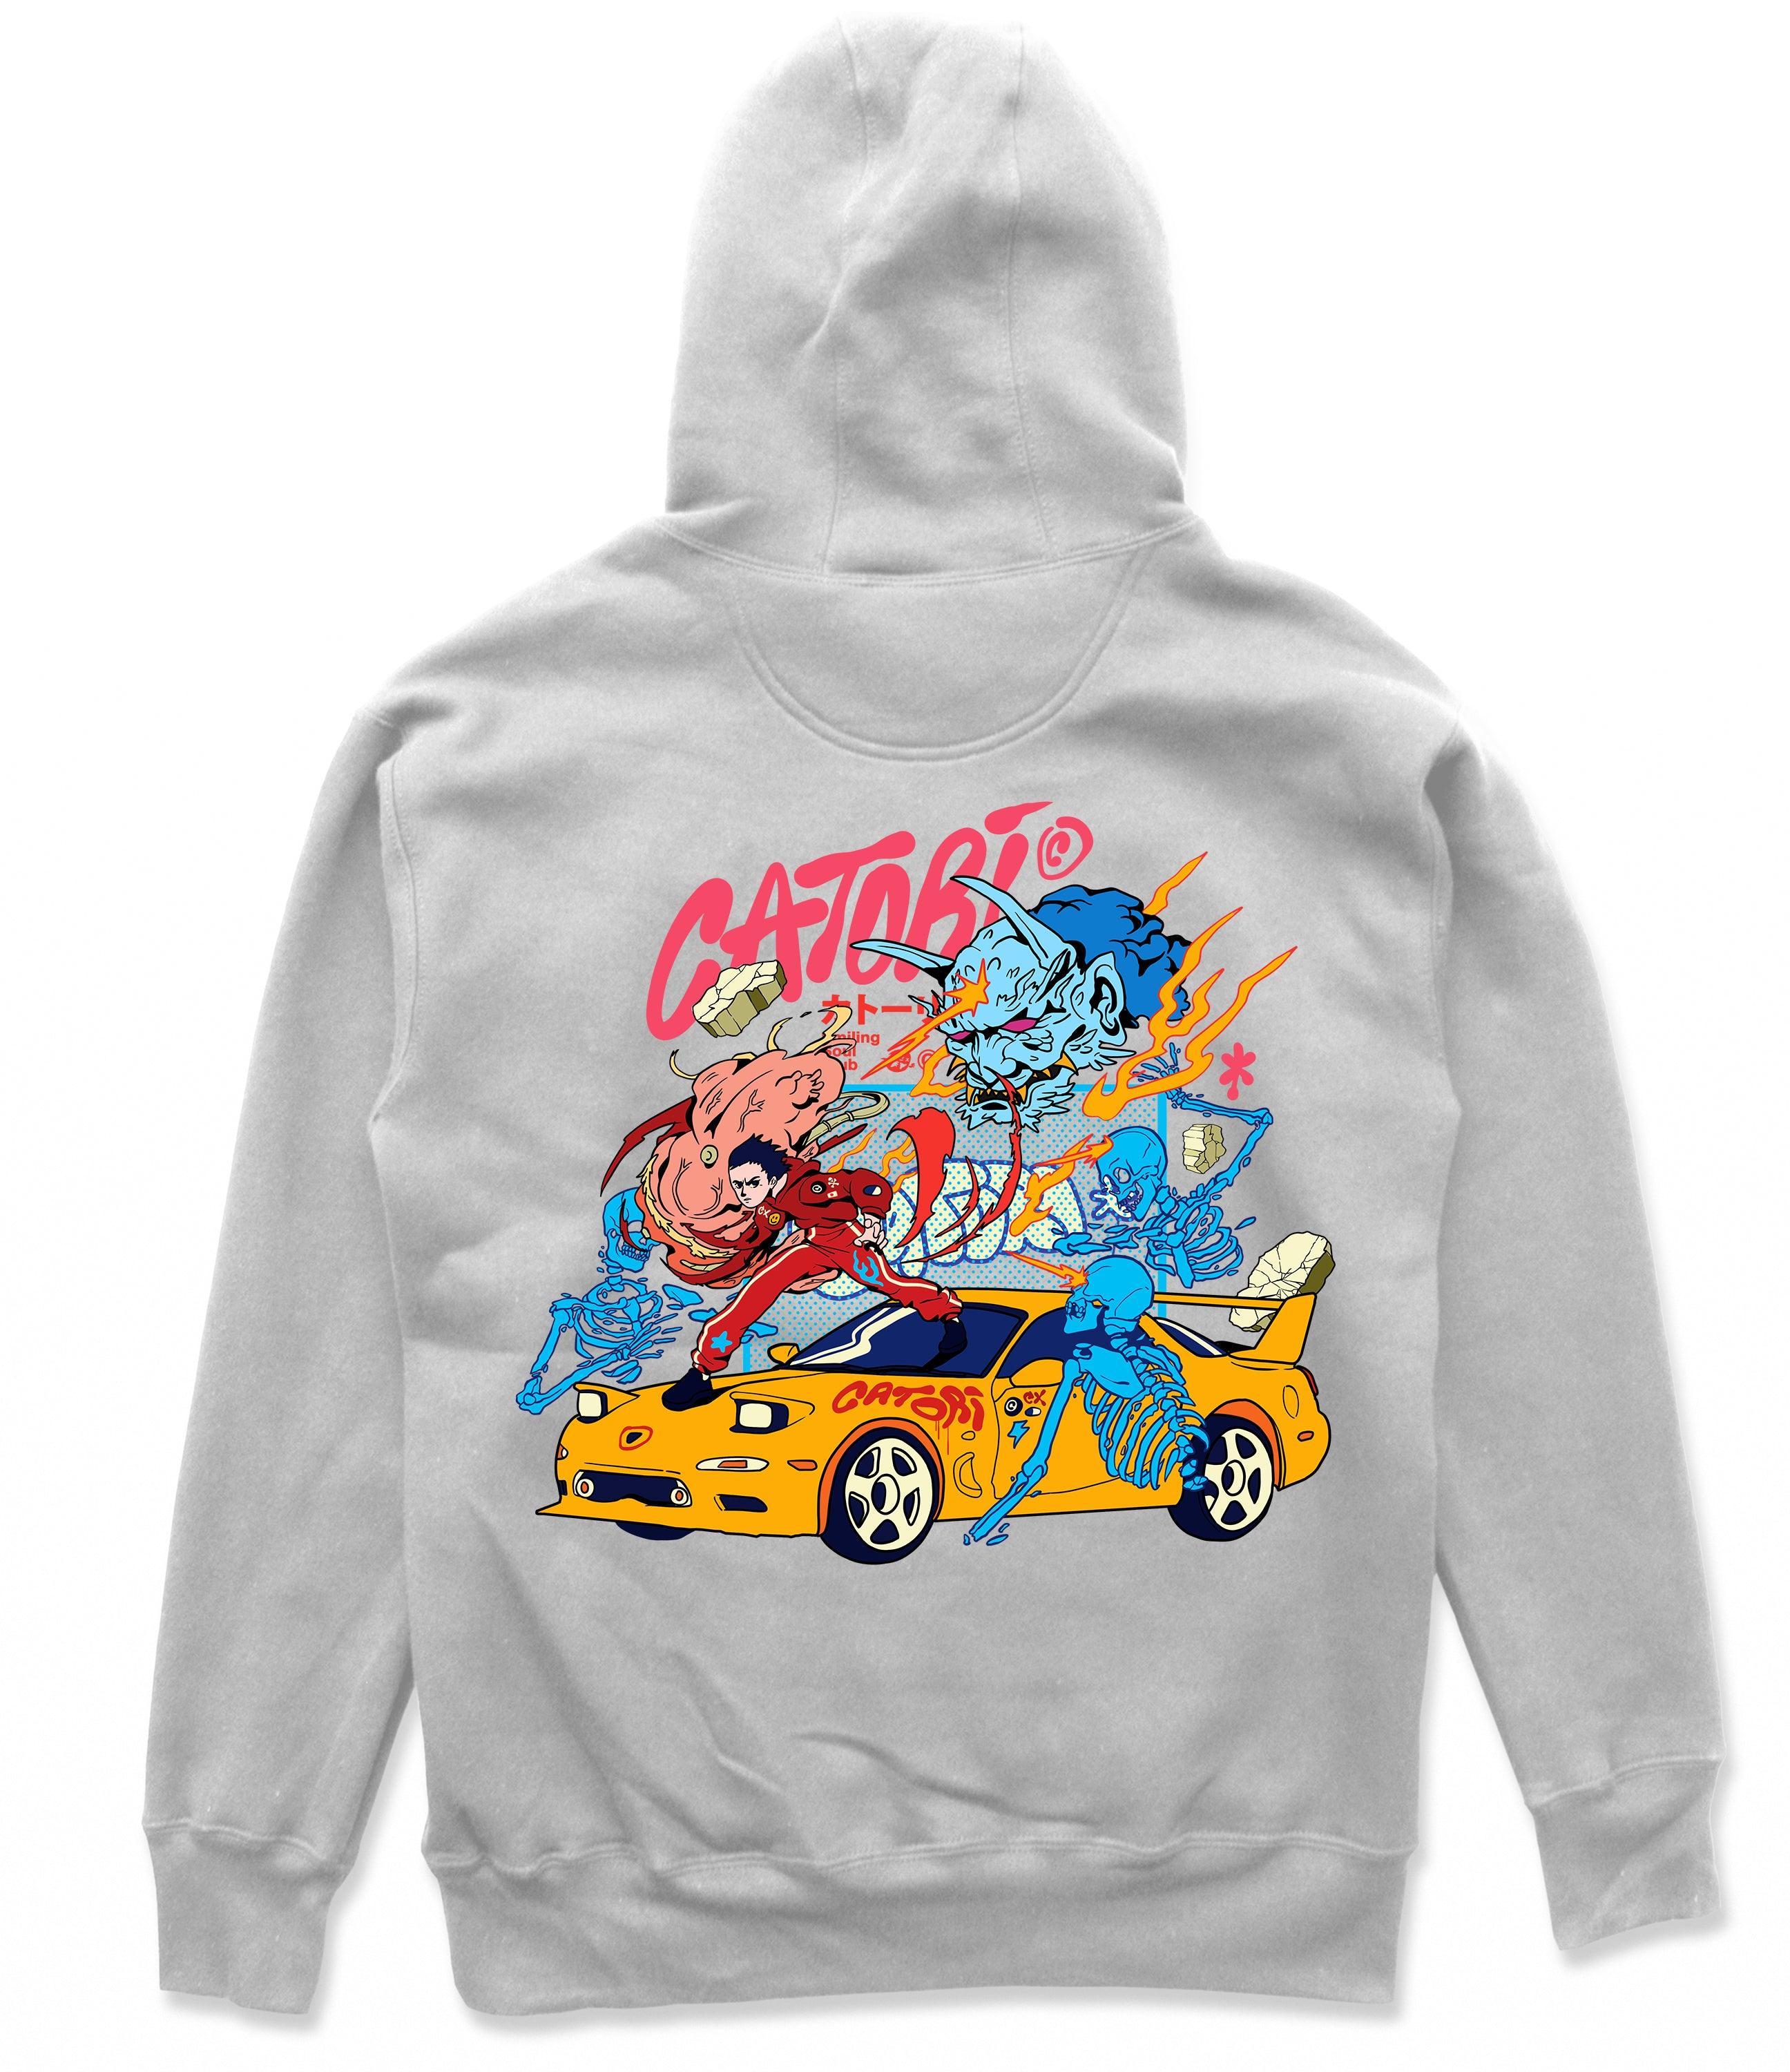 Monster Shooter Hoodie at Catori Clothing | Graphic & Anime Tees, Hoodies & Sweatshirts 